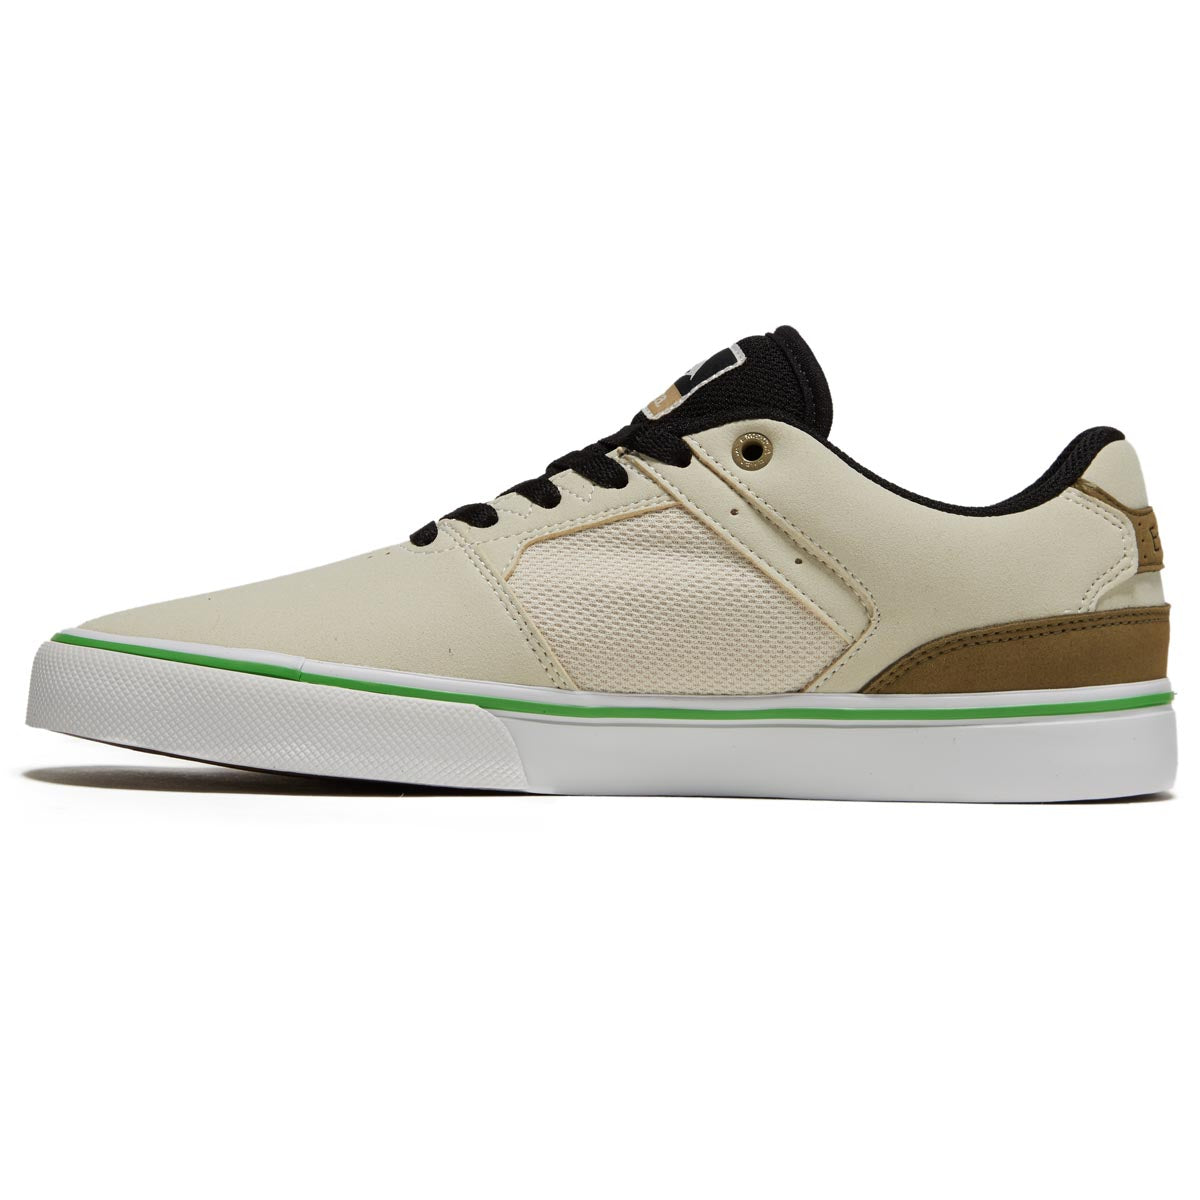 Emerica The Low Vulc Shoes - Tan/Green image 2